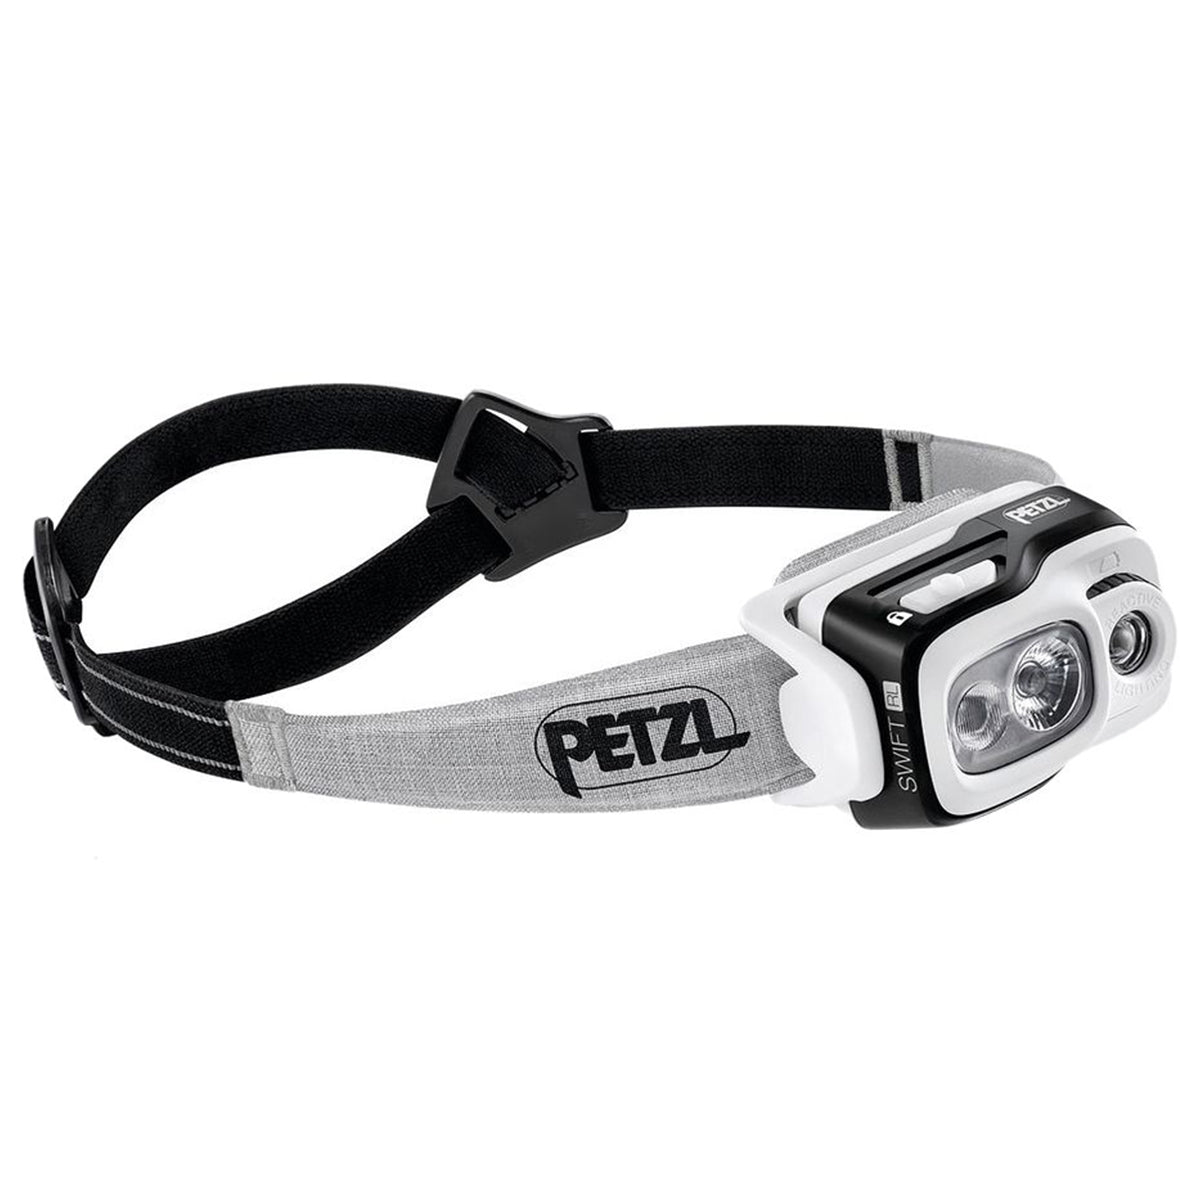 Petzl Swift RL Headlamp in Petzl Swift RL by Petzl America | Gear - goHUNT Shop by GOHUNT | Petzl America - GOHUNT Shop